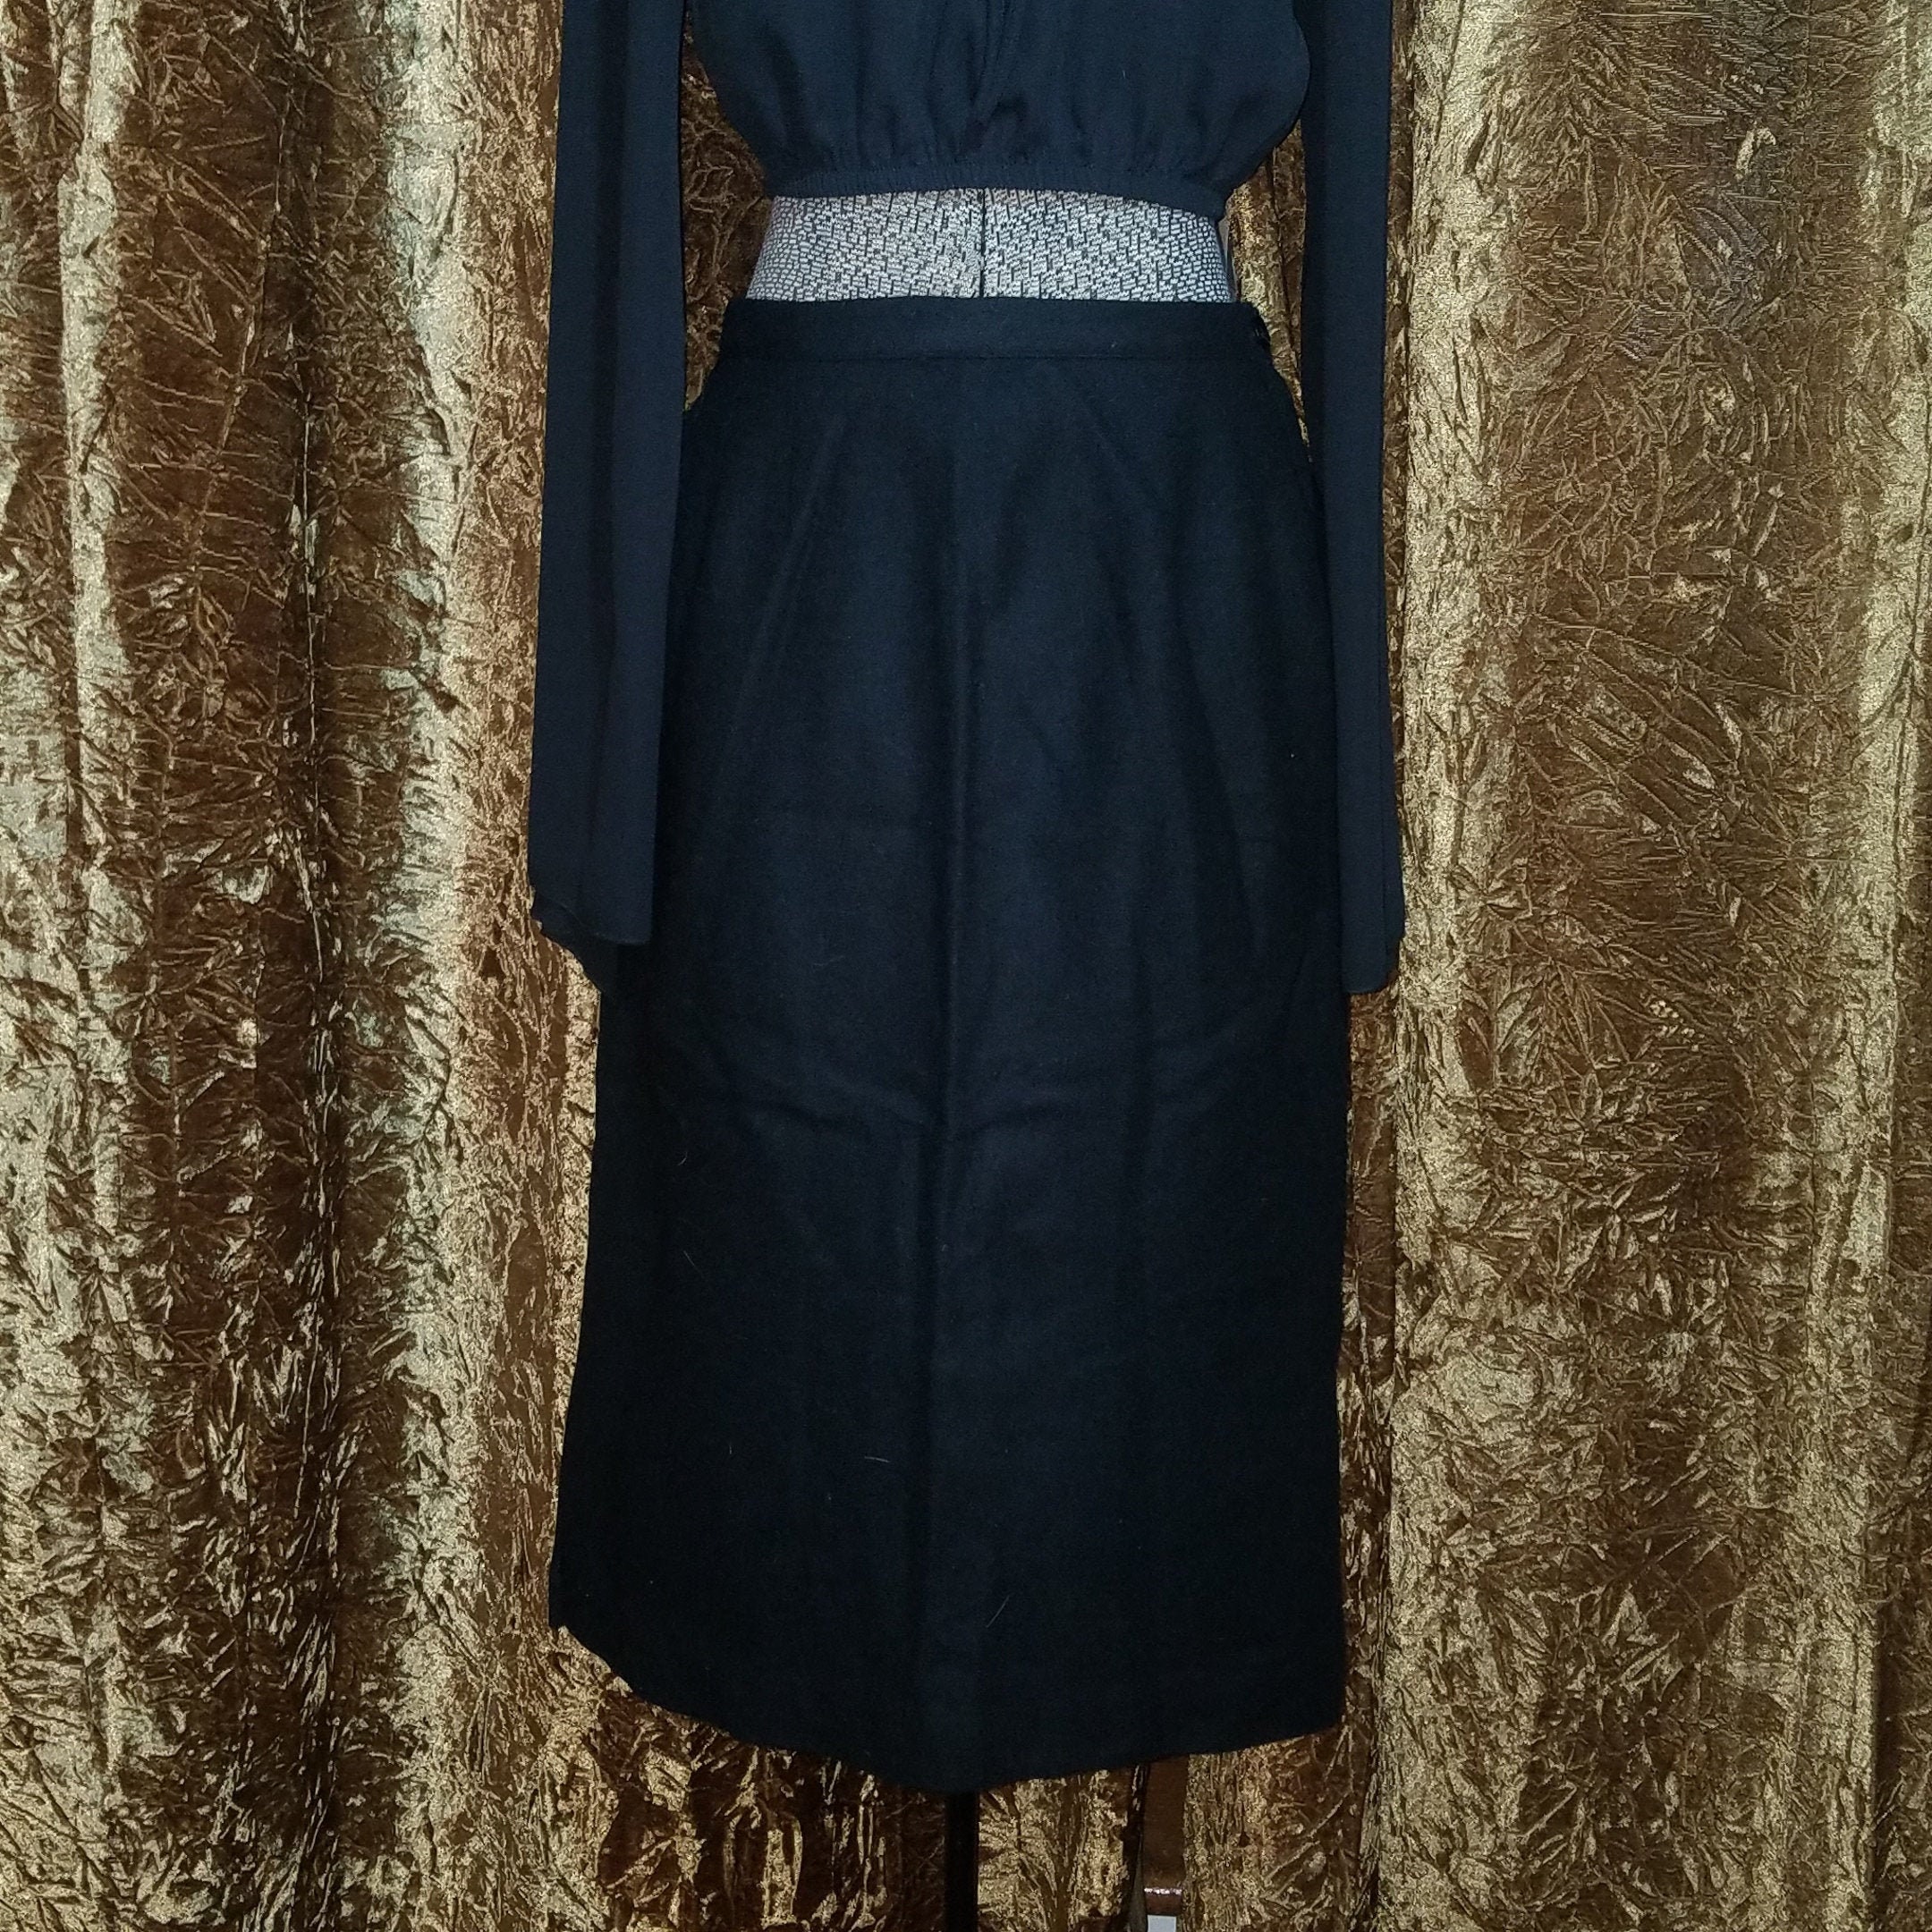 Vintage 1950's Black Wool Blend Skirt, Metal Zipper, Union Label, Xs Small